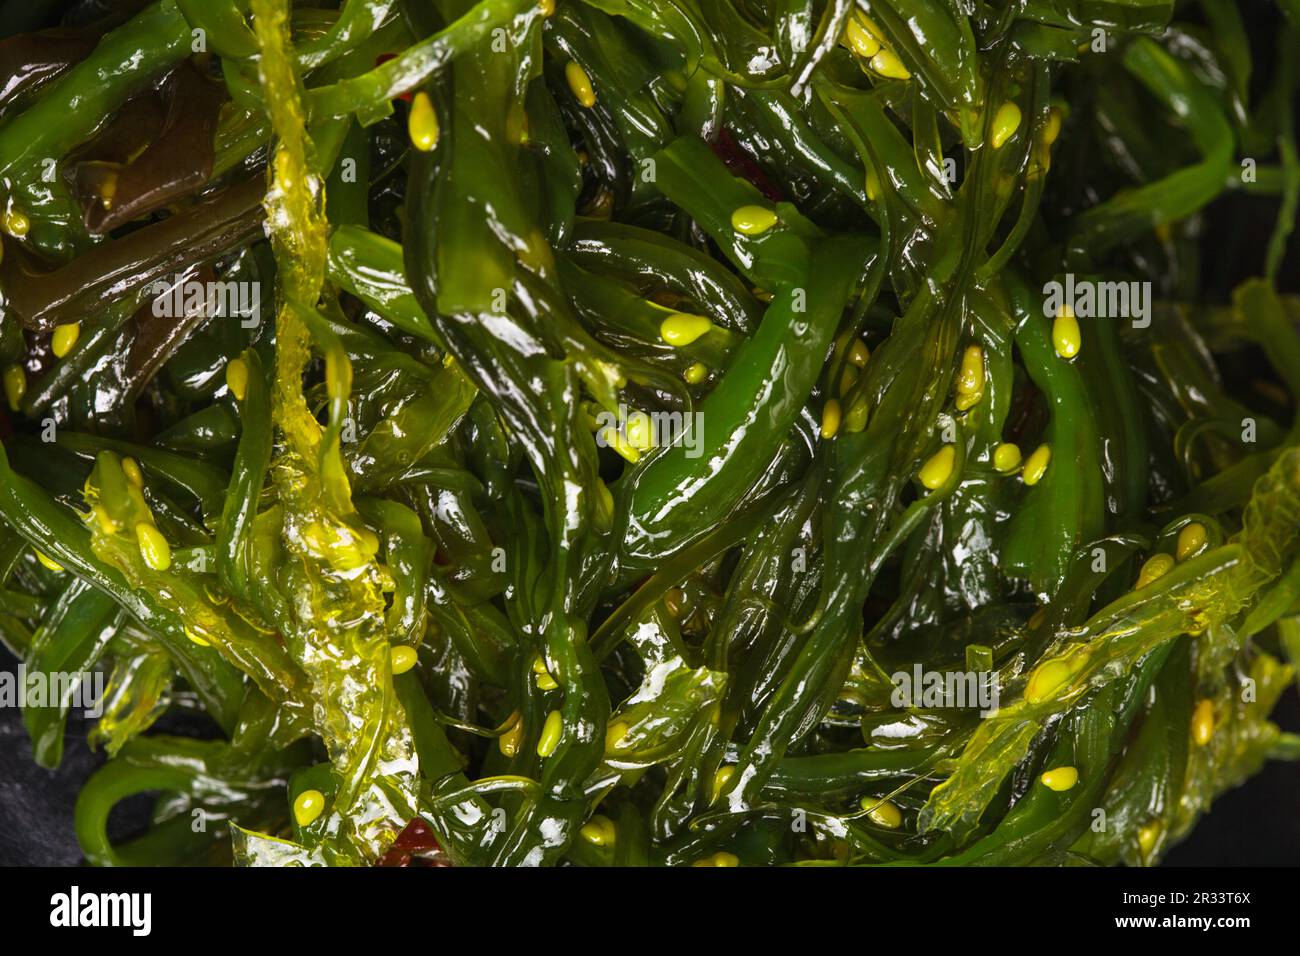 Seaweed salad Stock Photo